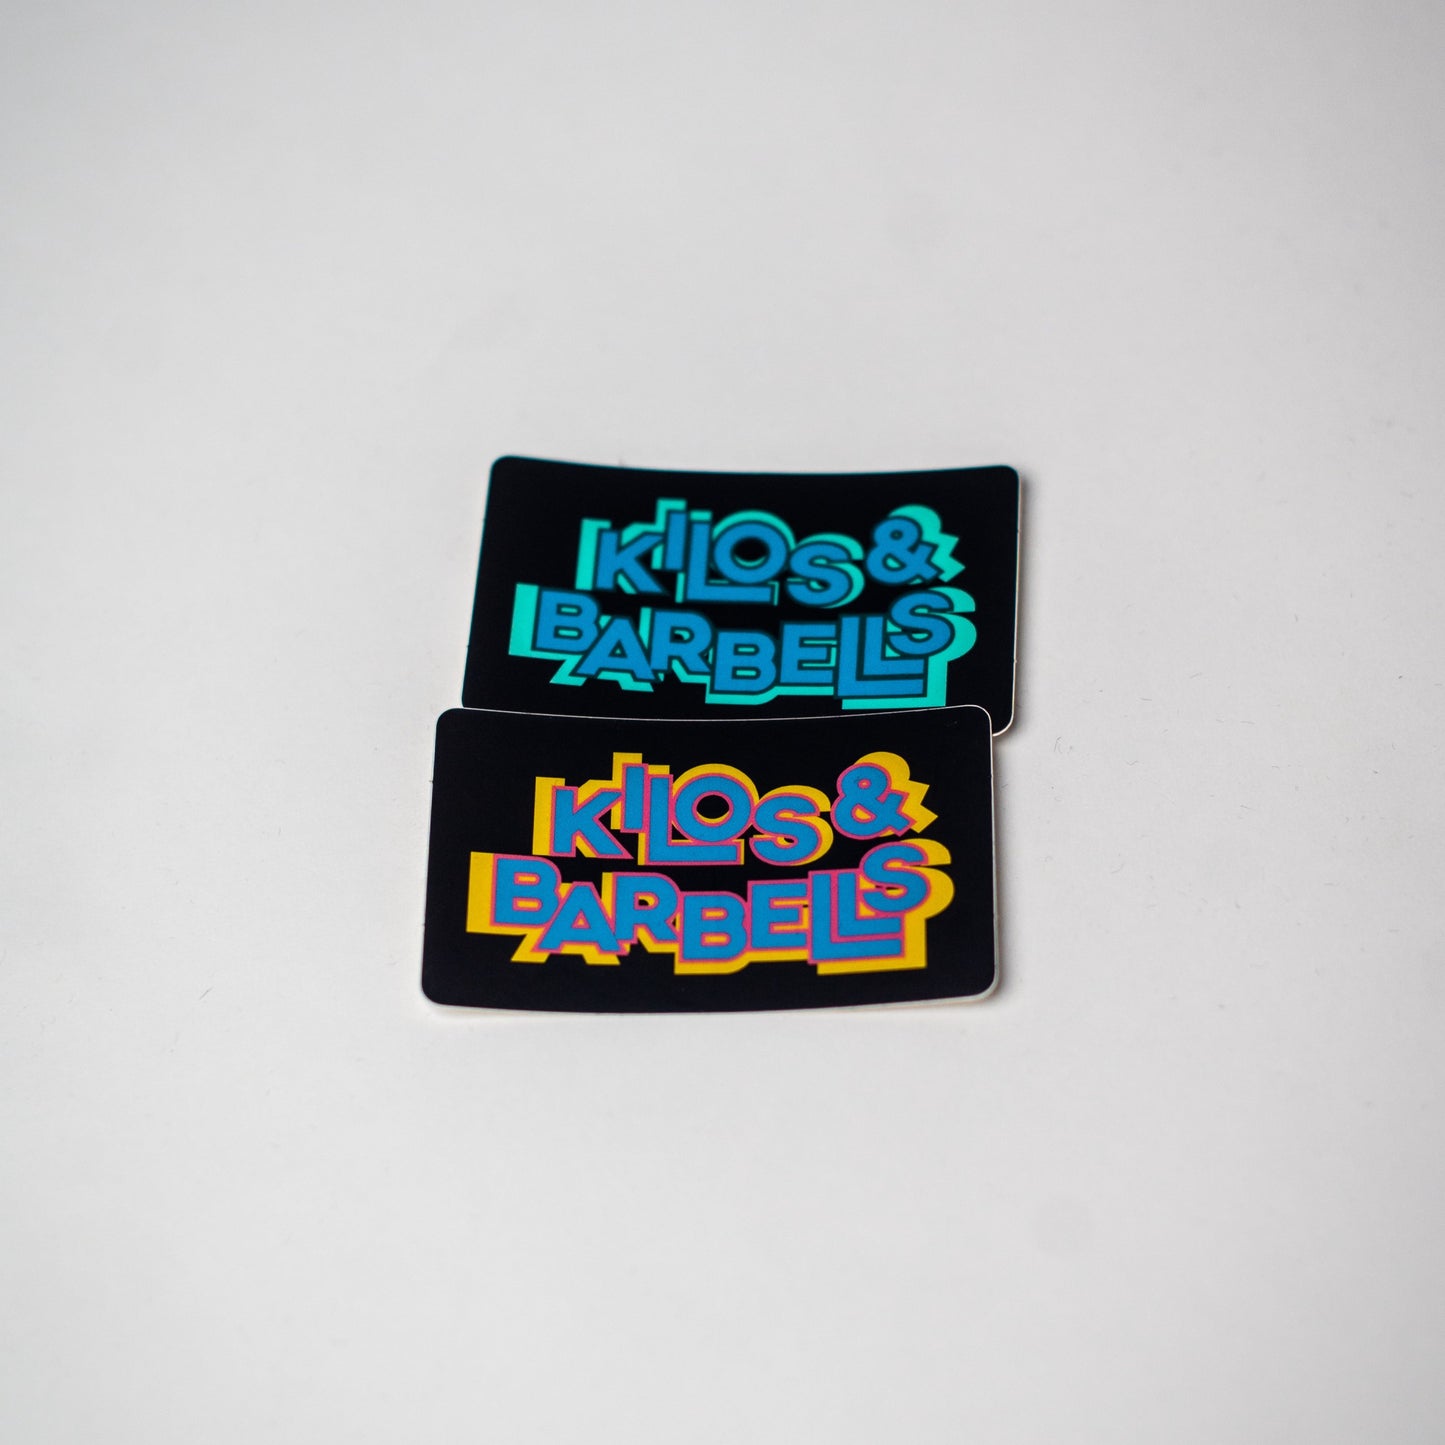 
                  
                    Kilos and Barbells Overtone Sticker
                  
                